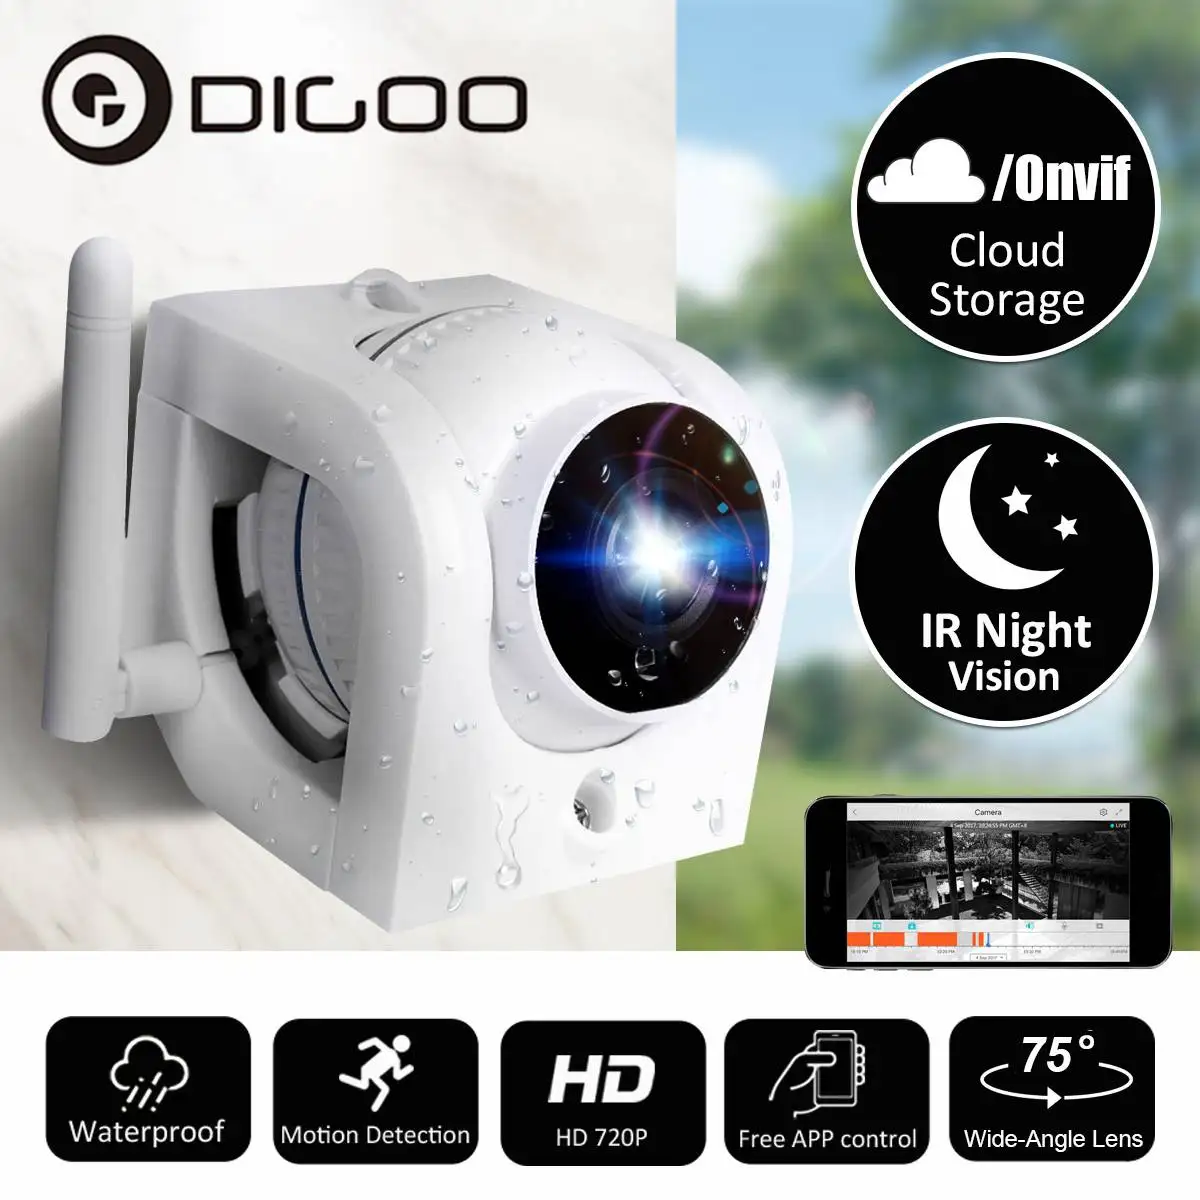 Digoo DG-W02f 720P наружная Wi-Fi IP камера для безопасности монитор Облачное хранилище Водонепроницаемый Onvif приложение сигнализация Обнаружение движения